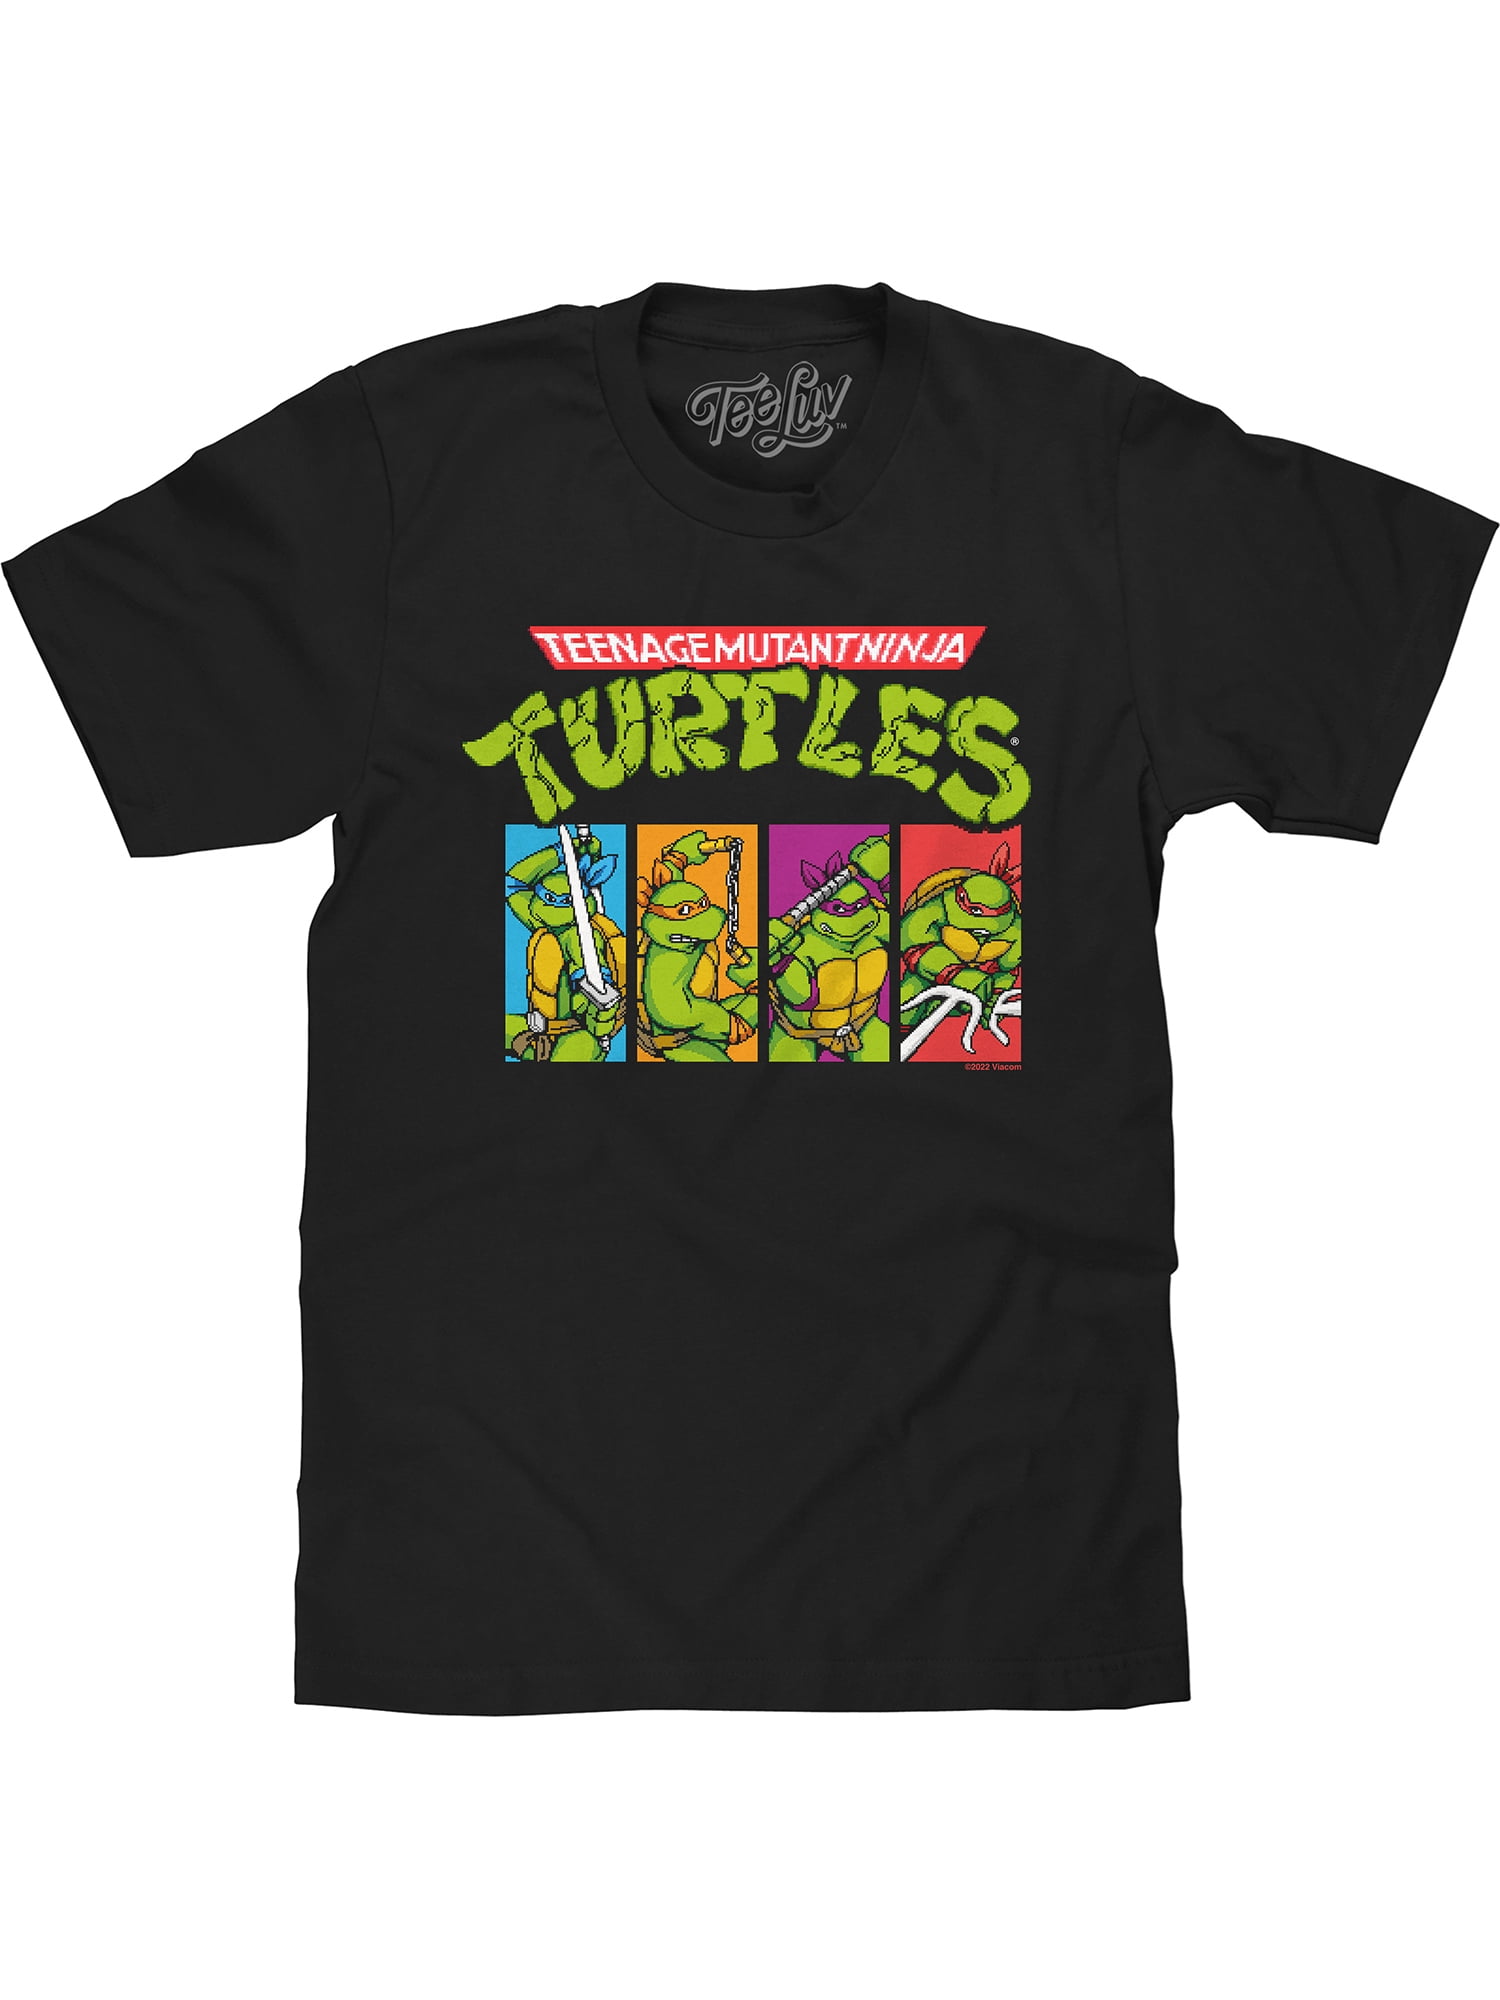 Teenage Mutant Ninja Turtles Men's Retro Sunset Circle Graphic T-Shirt, X-Large, Cotton